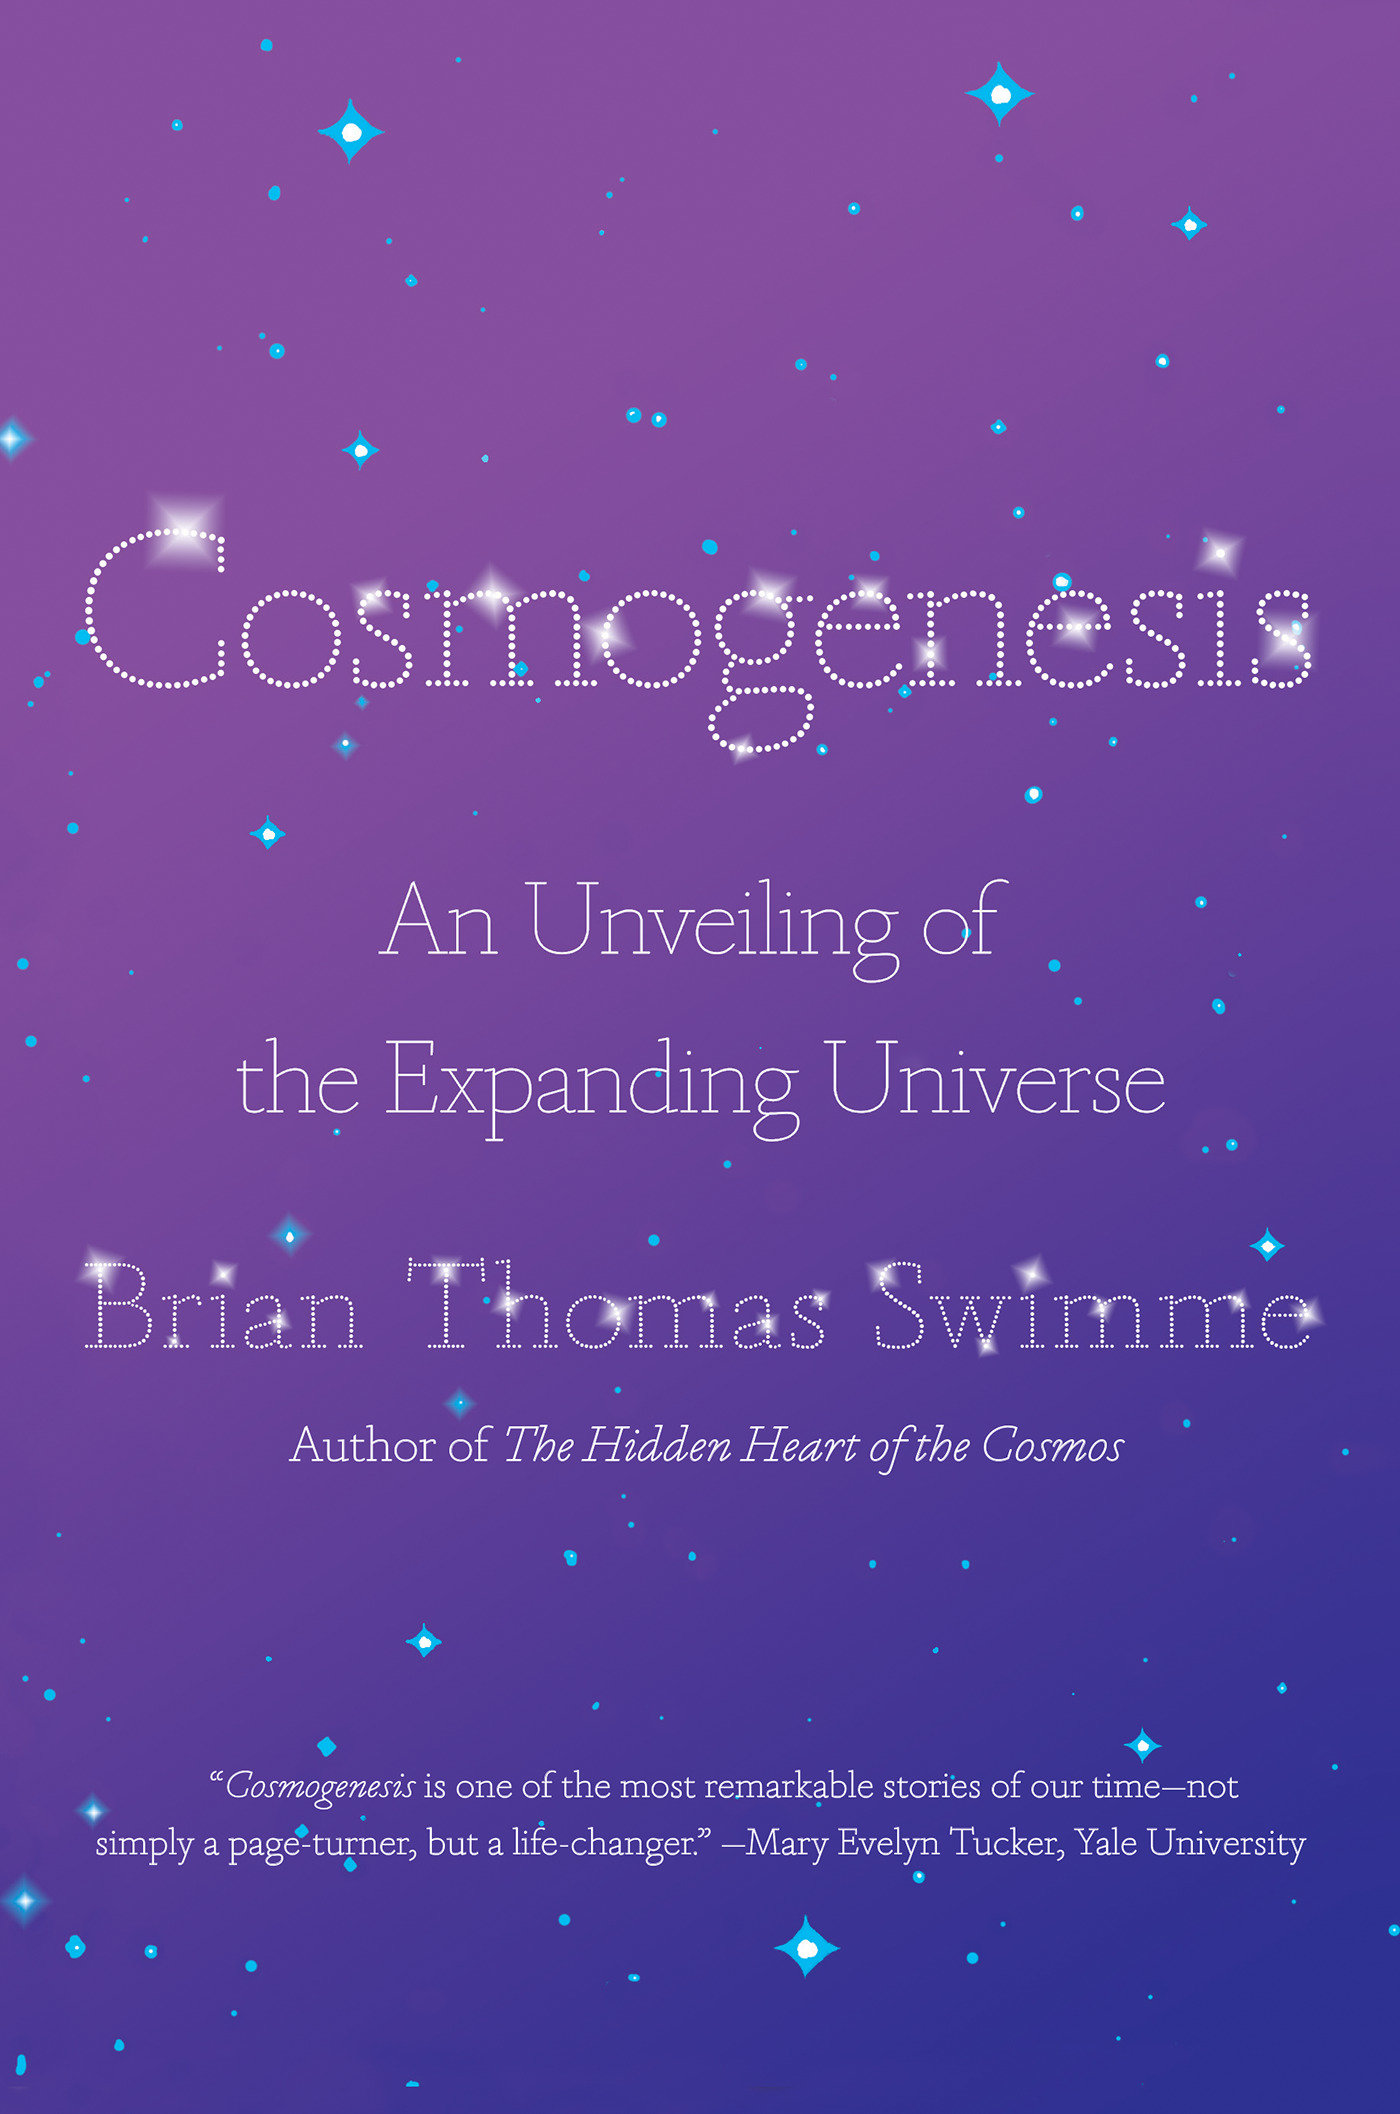 Cosmogenesis (Hardcover Book)